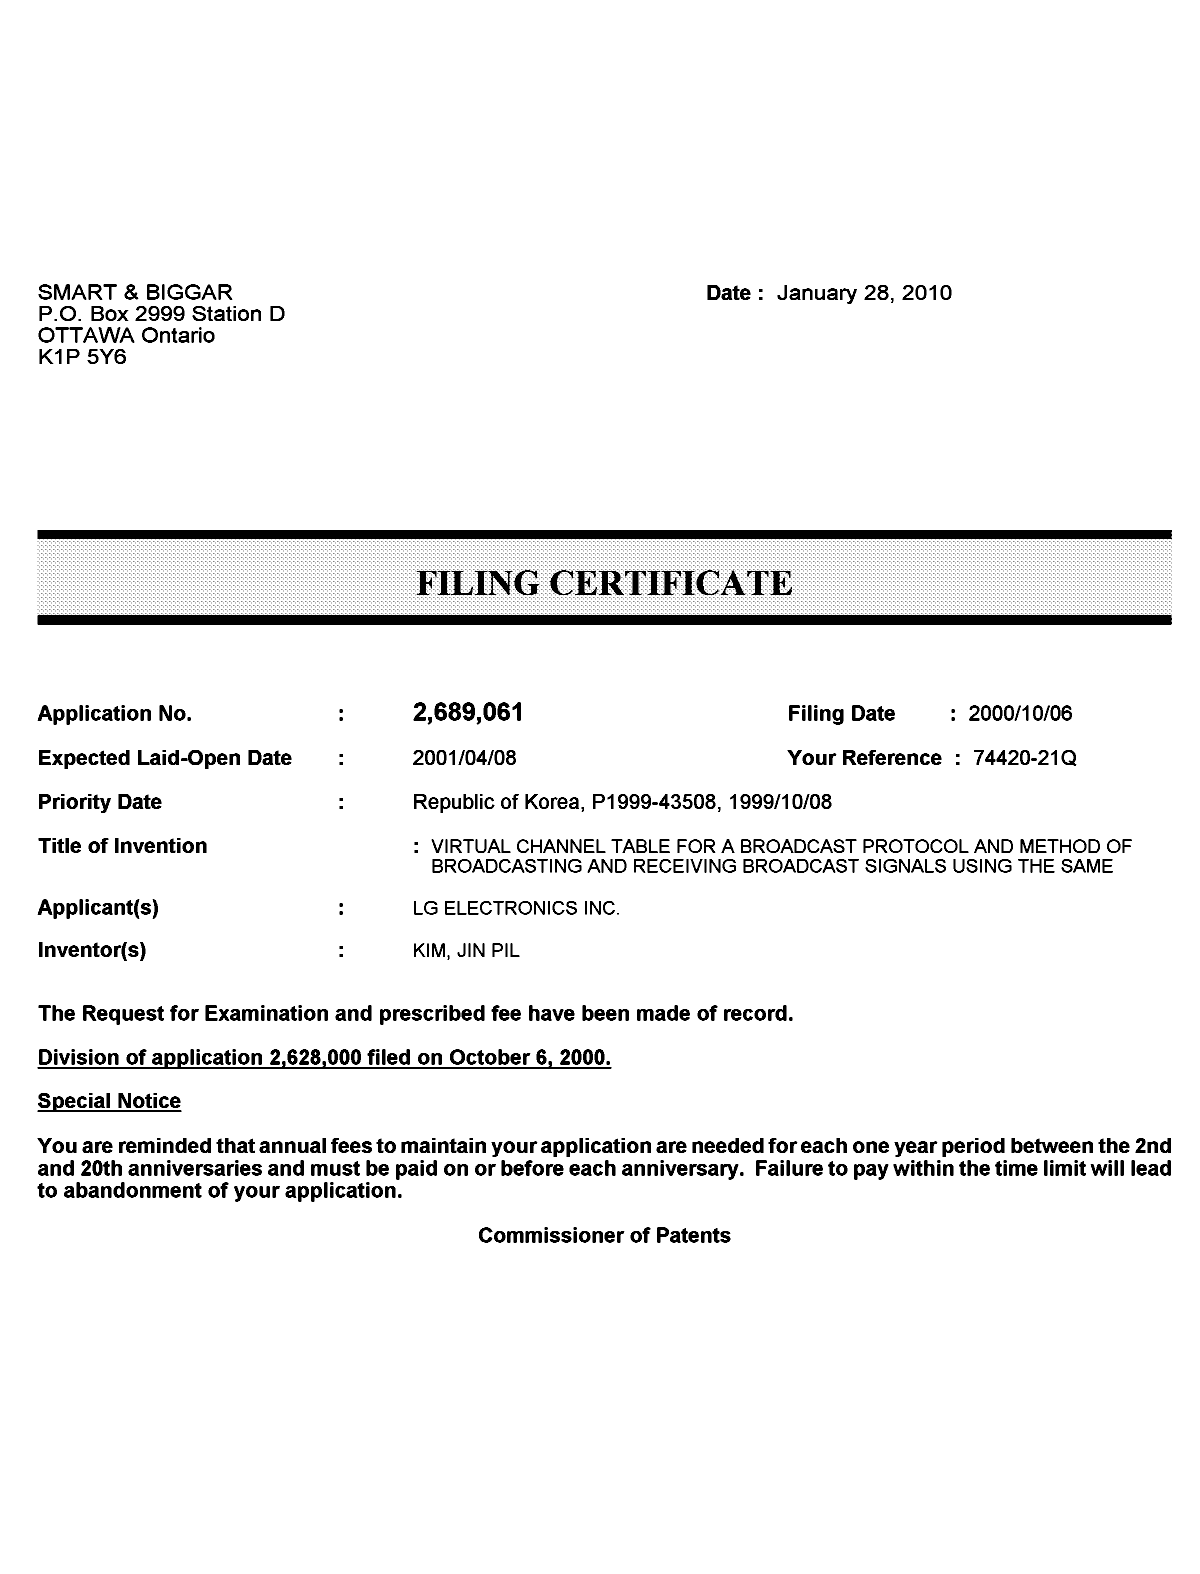 Canadian Patent Document 2689061. Correspondence 20091228. Image 1 of 1